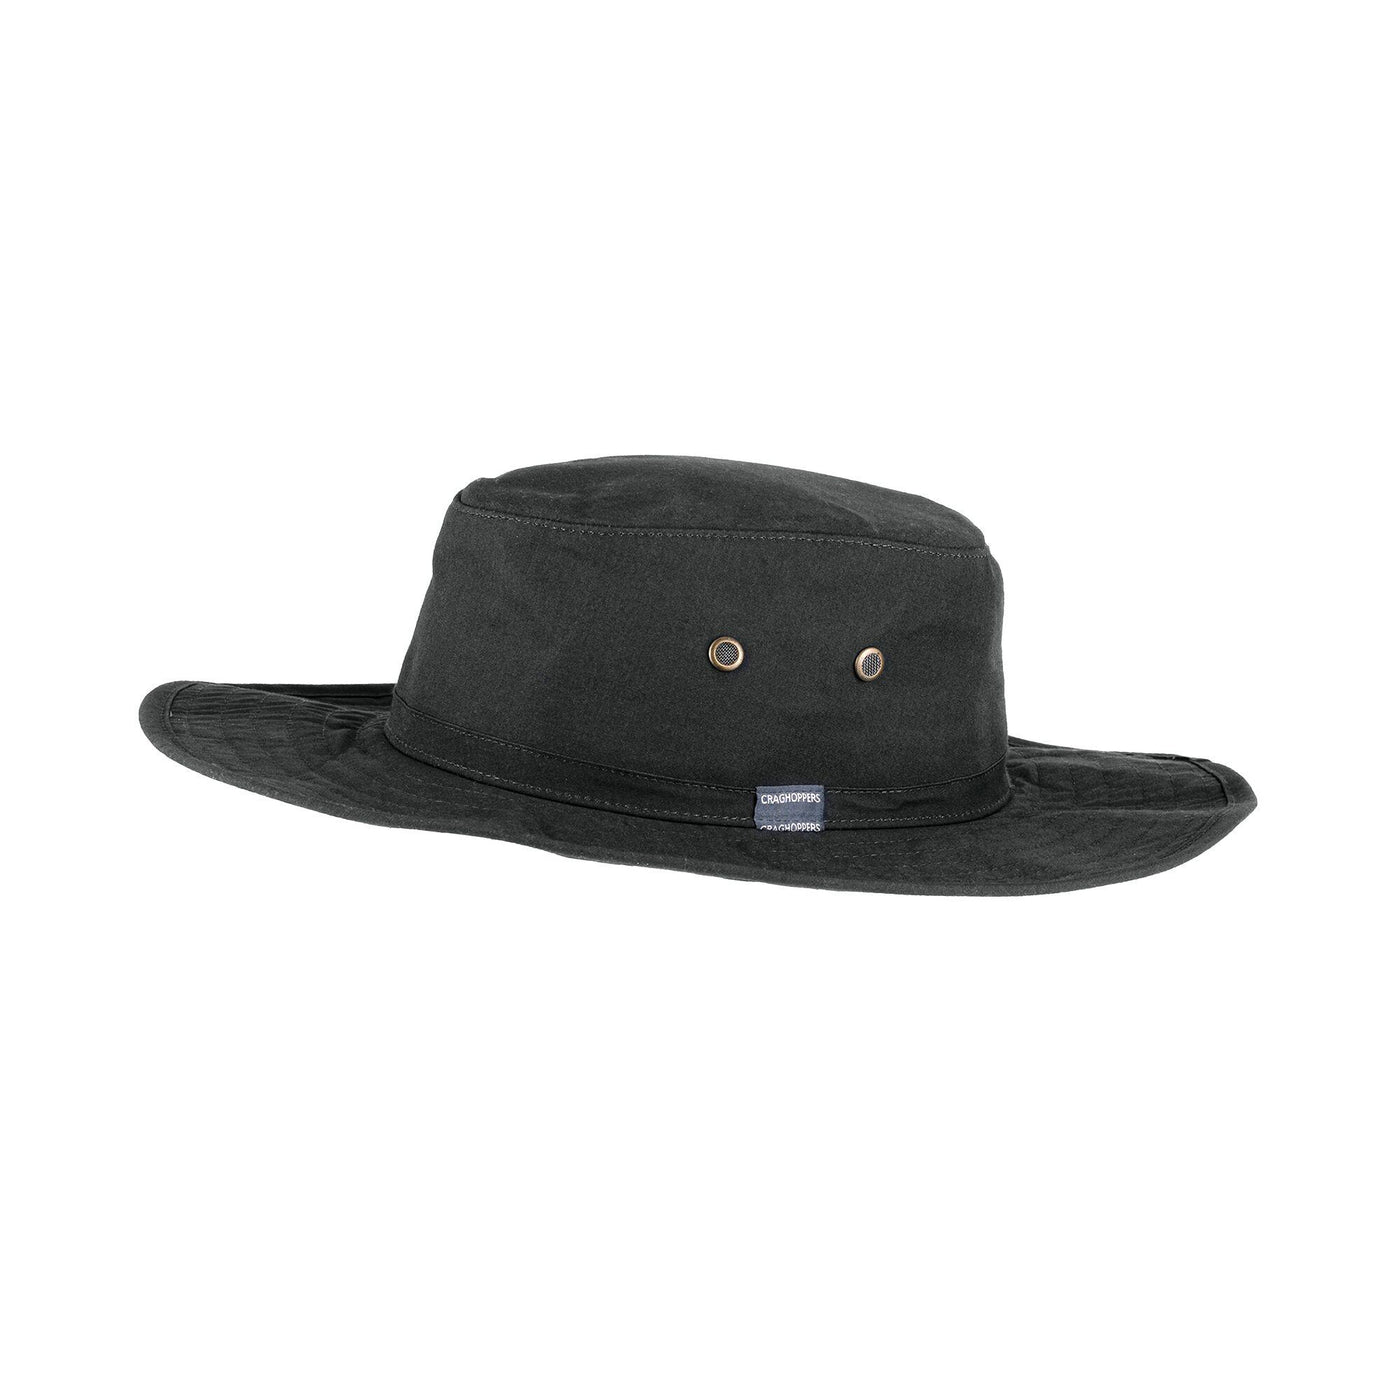 Craghoppers Expert Kiwi Ranger Hat